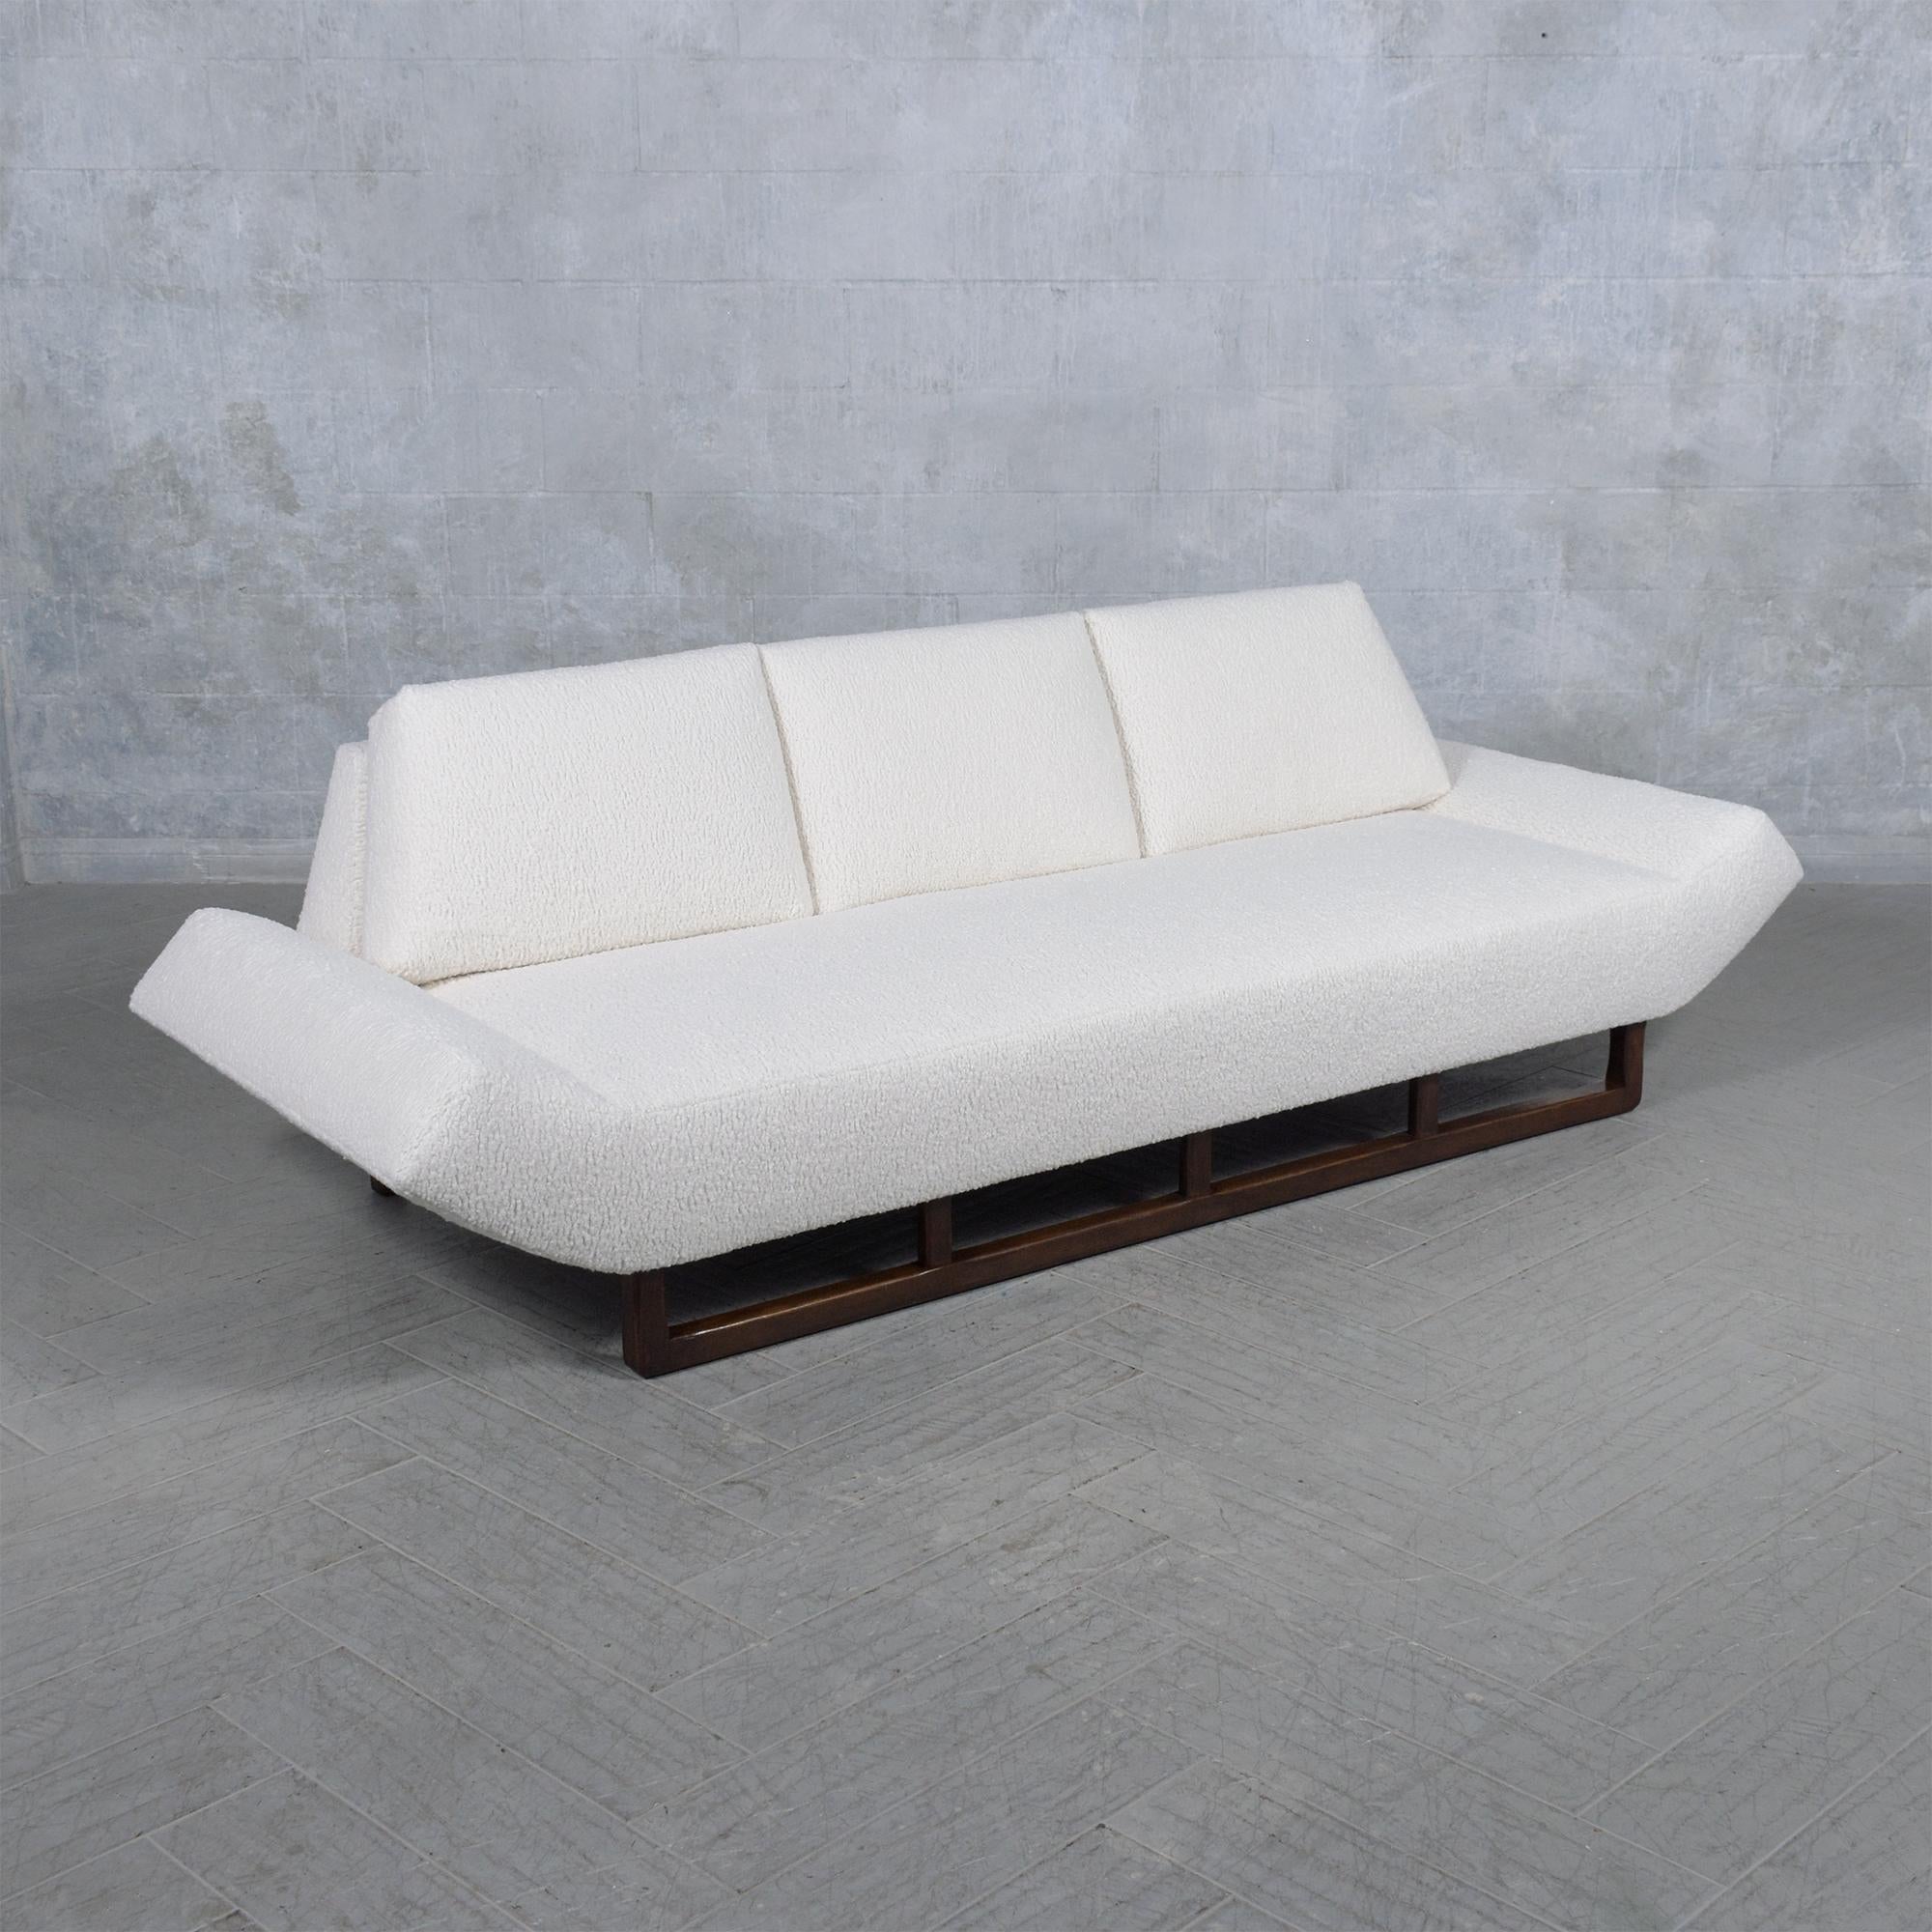 Vintage Mid-Century Sofa Restored: Classic Design Meets Modern Comfort 1